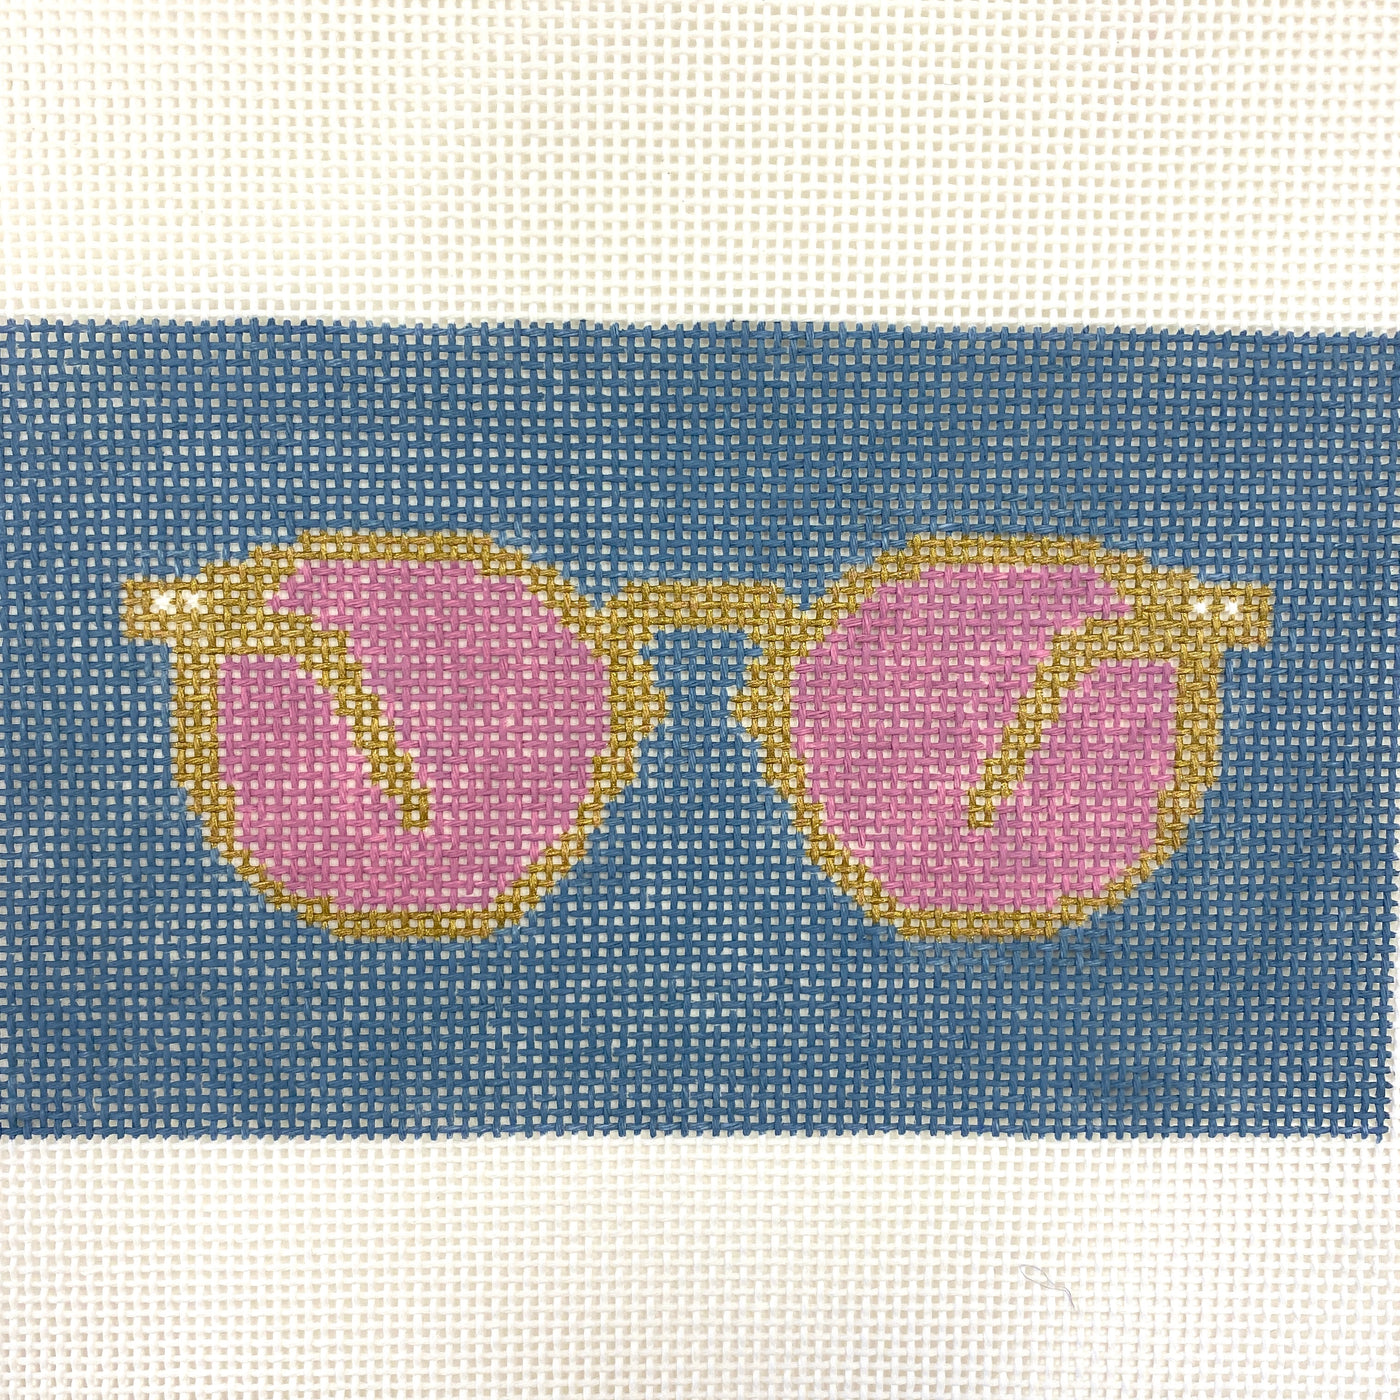 Rose Colored Eyeglass Case Needlepoint Canvas